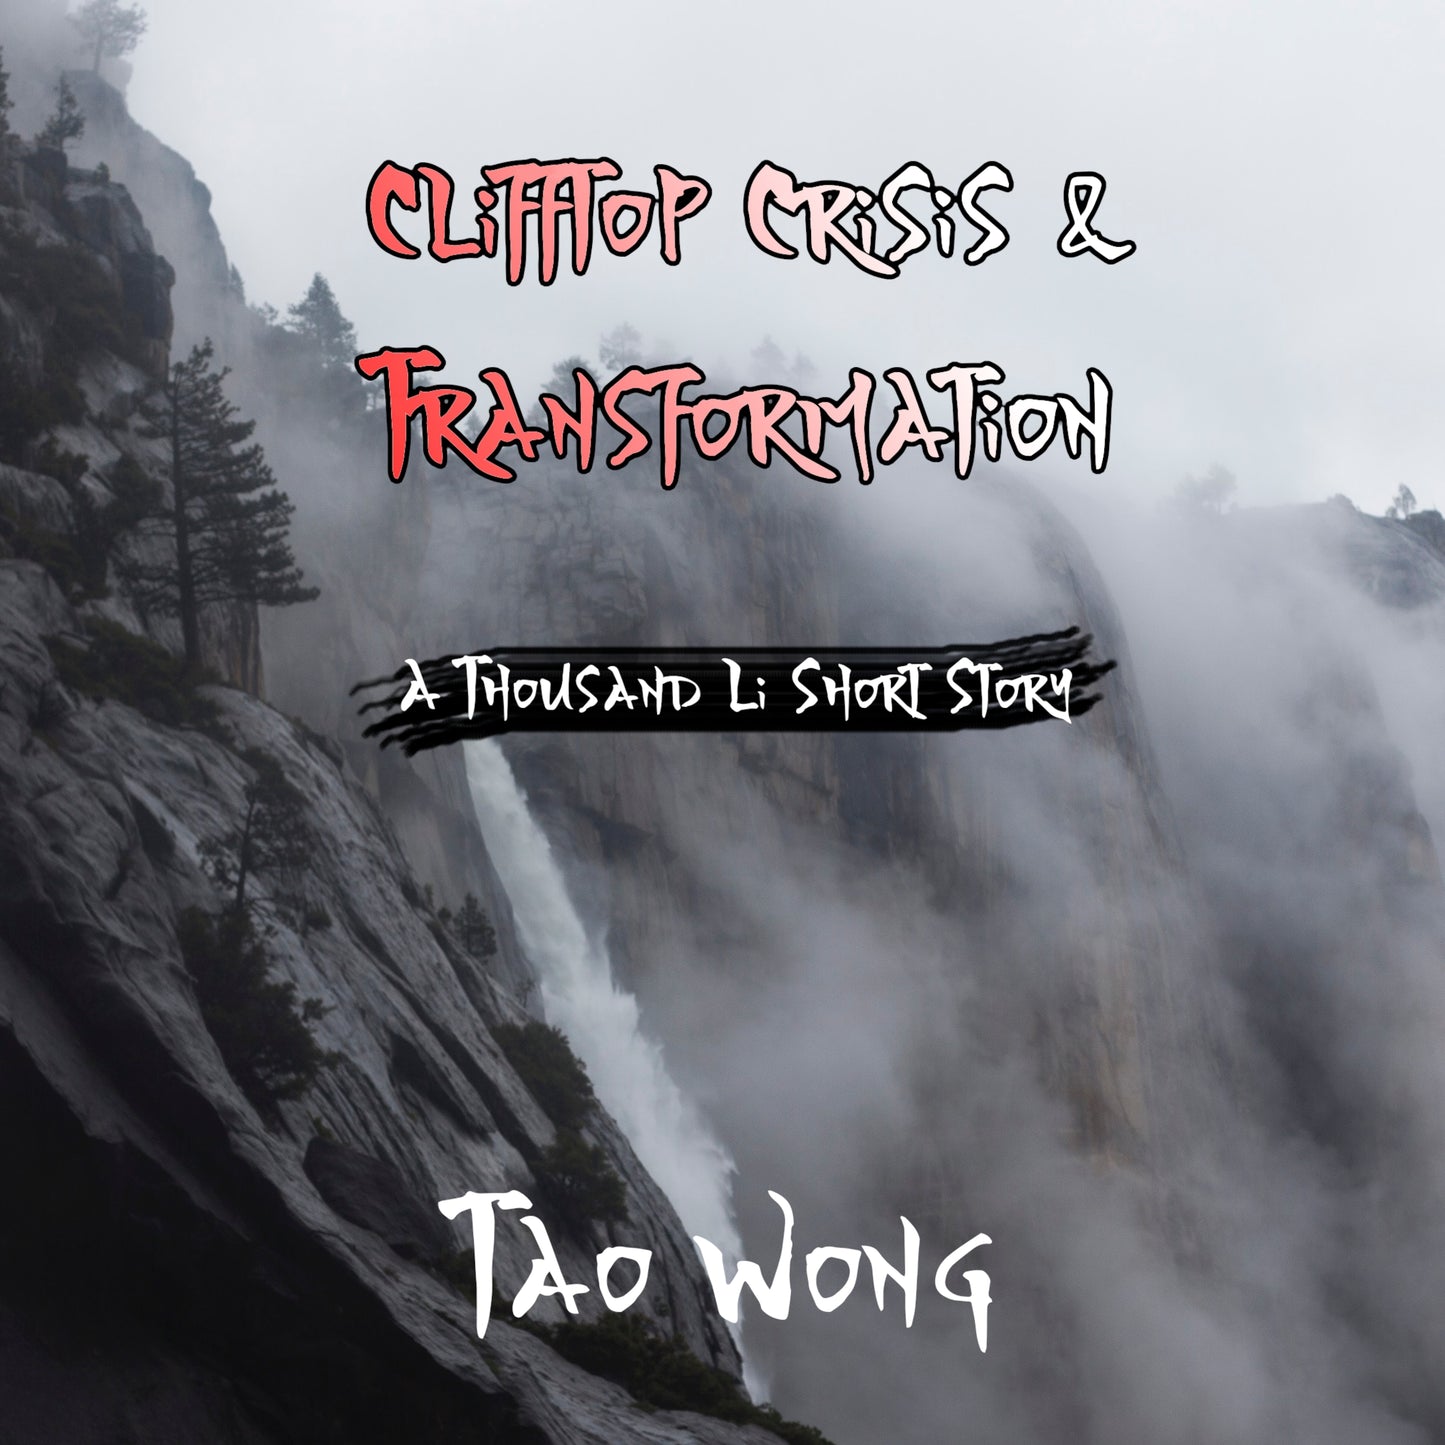 Clifftop Crisis & Transformation (A Thousand Li Short Story)